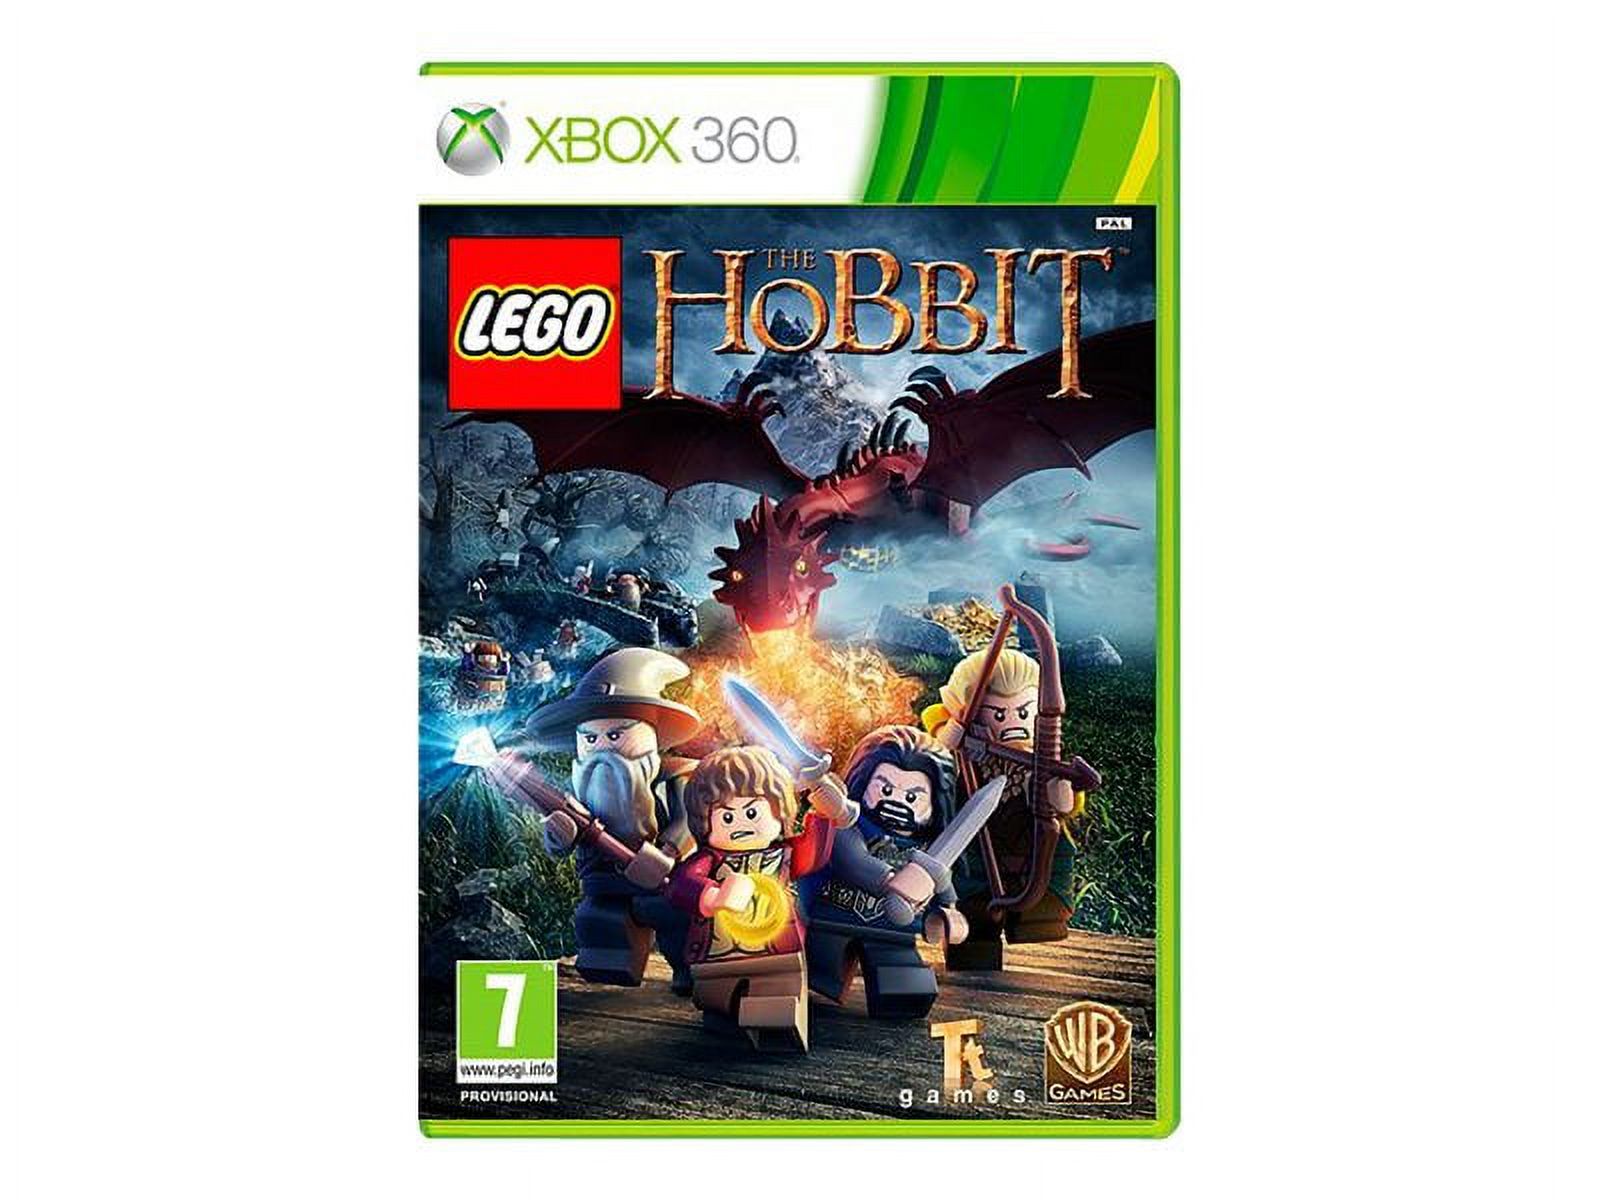 LEGO The Hobbit (Xbox 360) - image 1 of 16